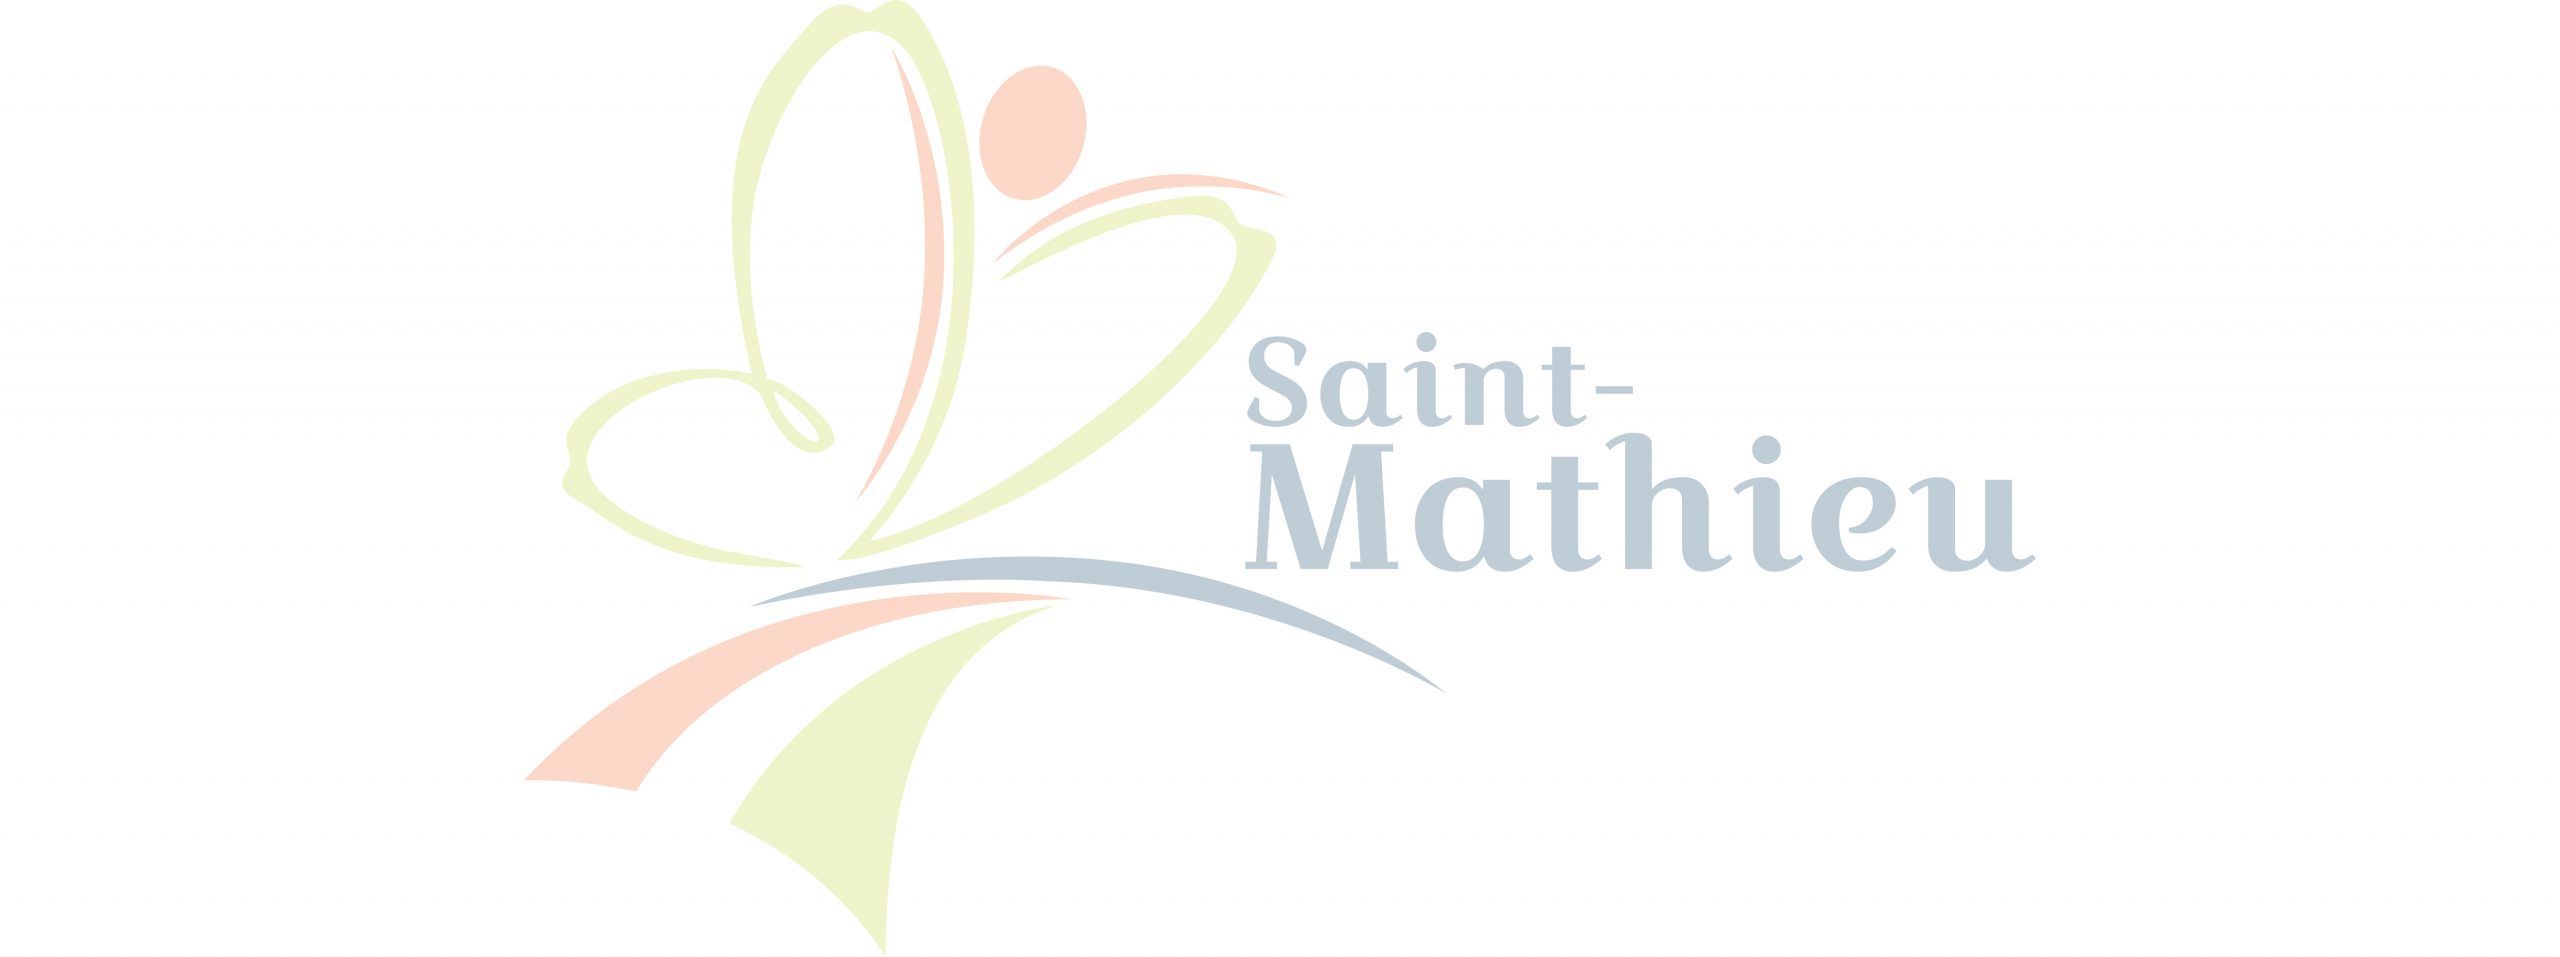 Tim Hortons Saint-Mathieu recrute !